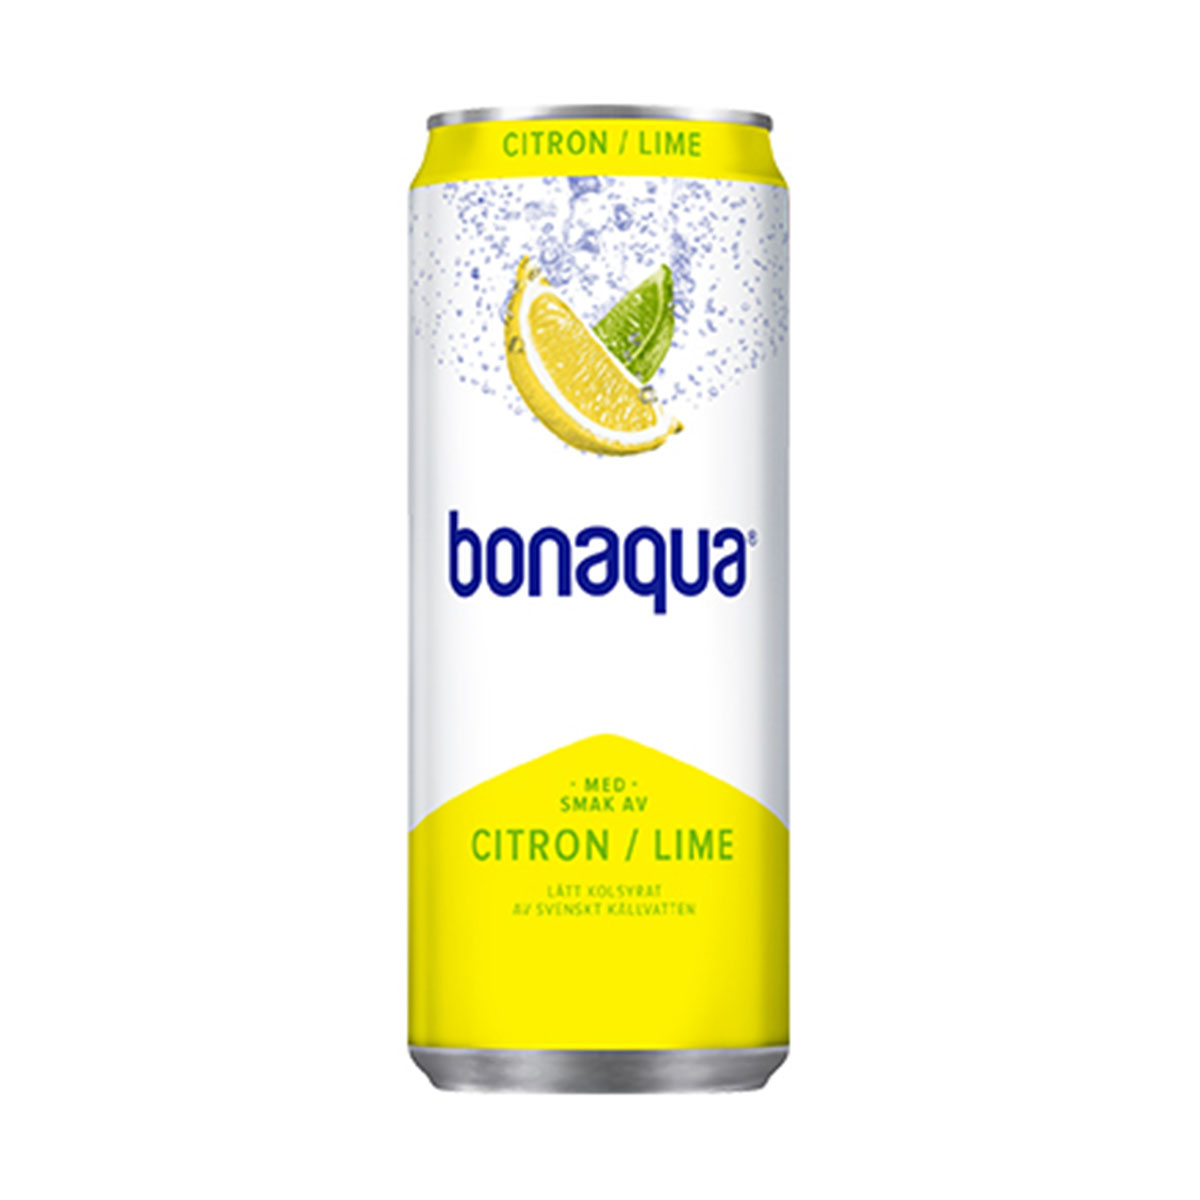 Miniralvatten Bonaqua citron/lime 33 cl